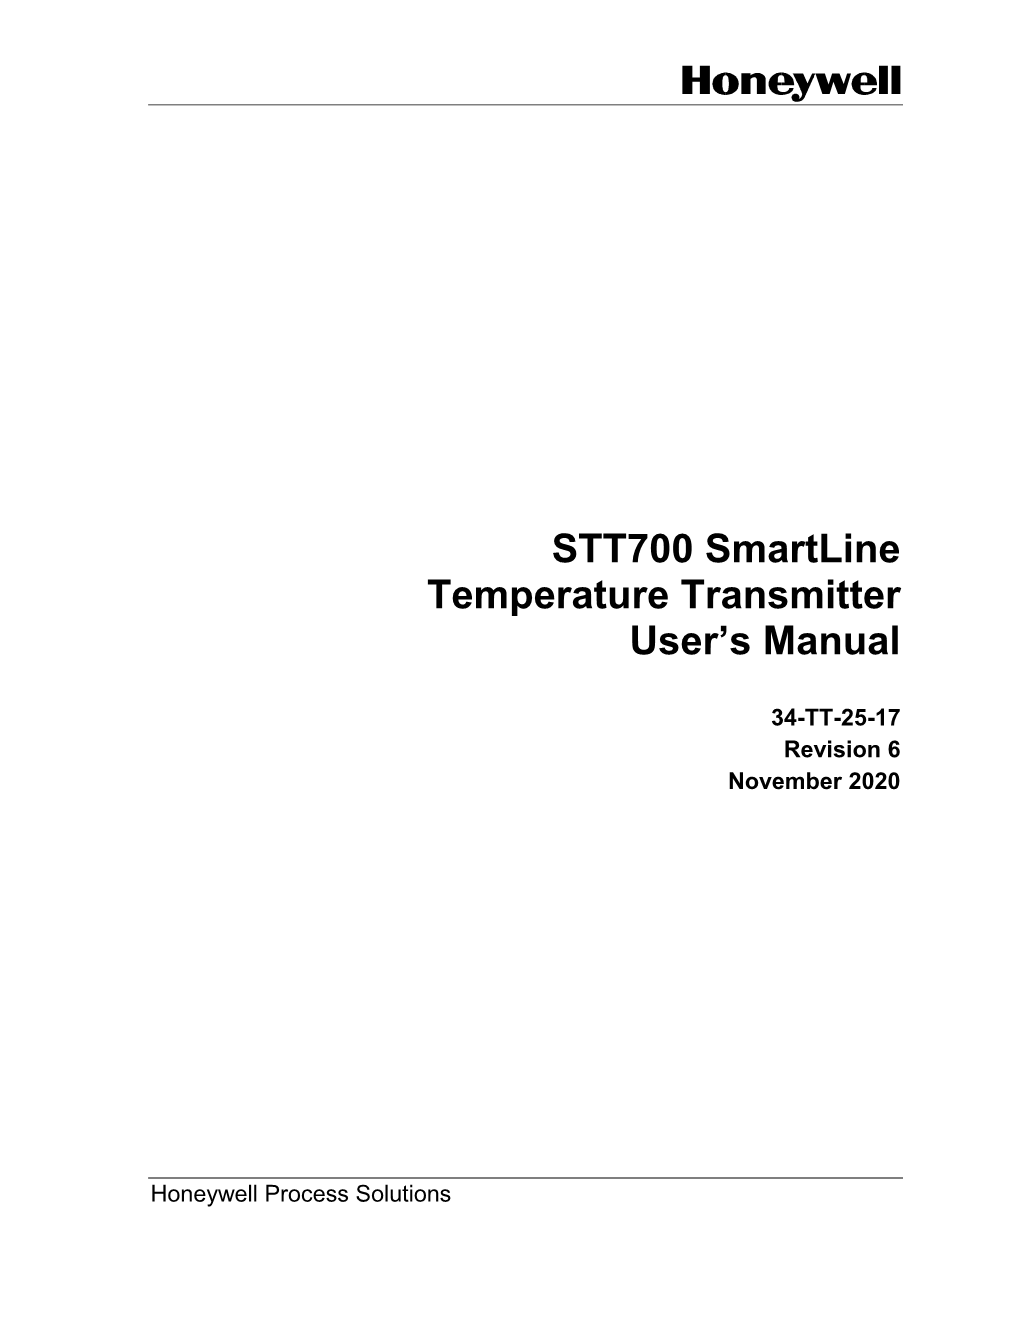 STT700 Smartline Temperature Transmitter User's Manual